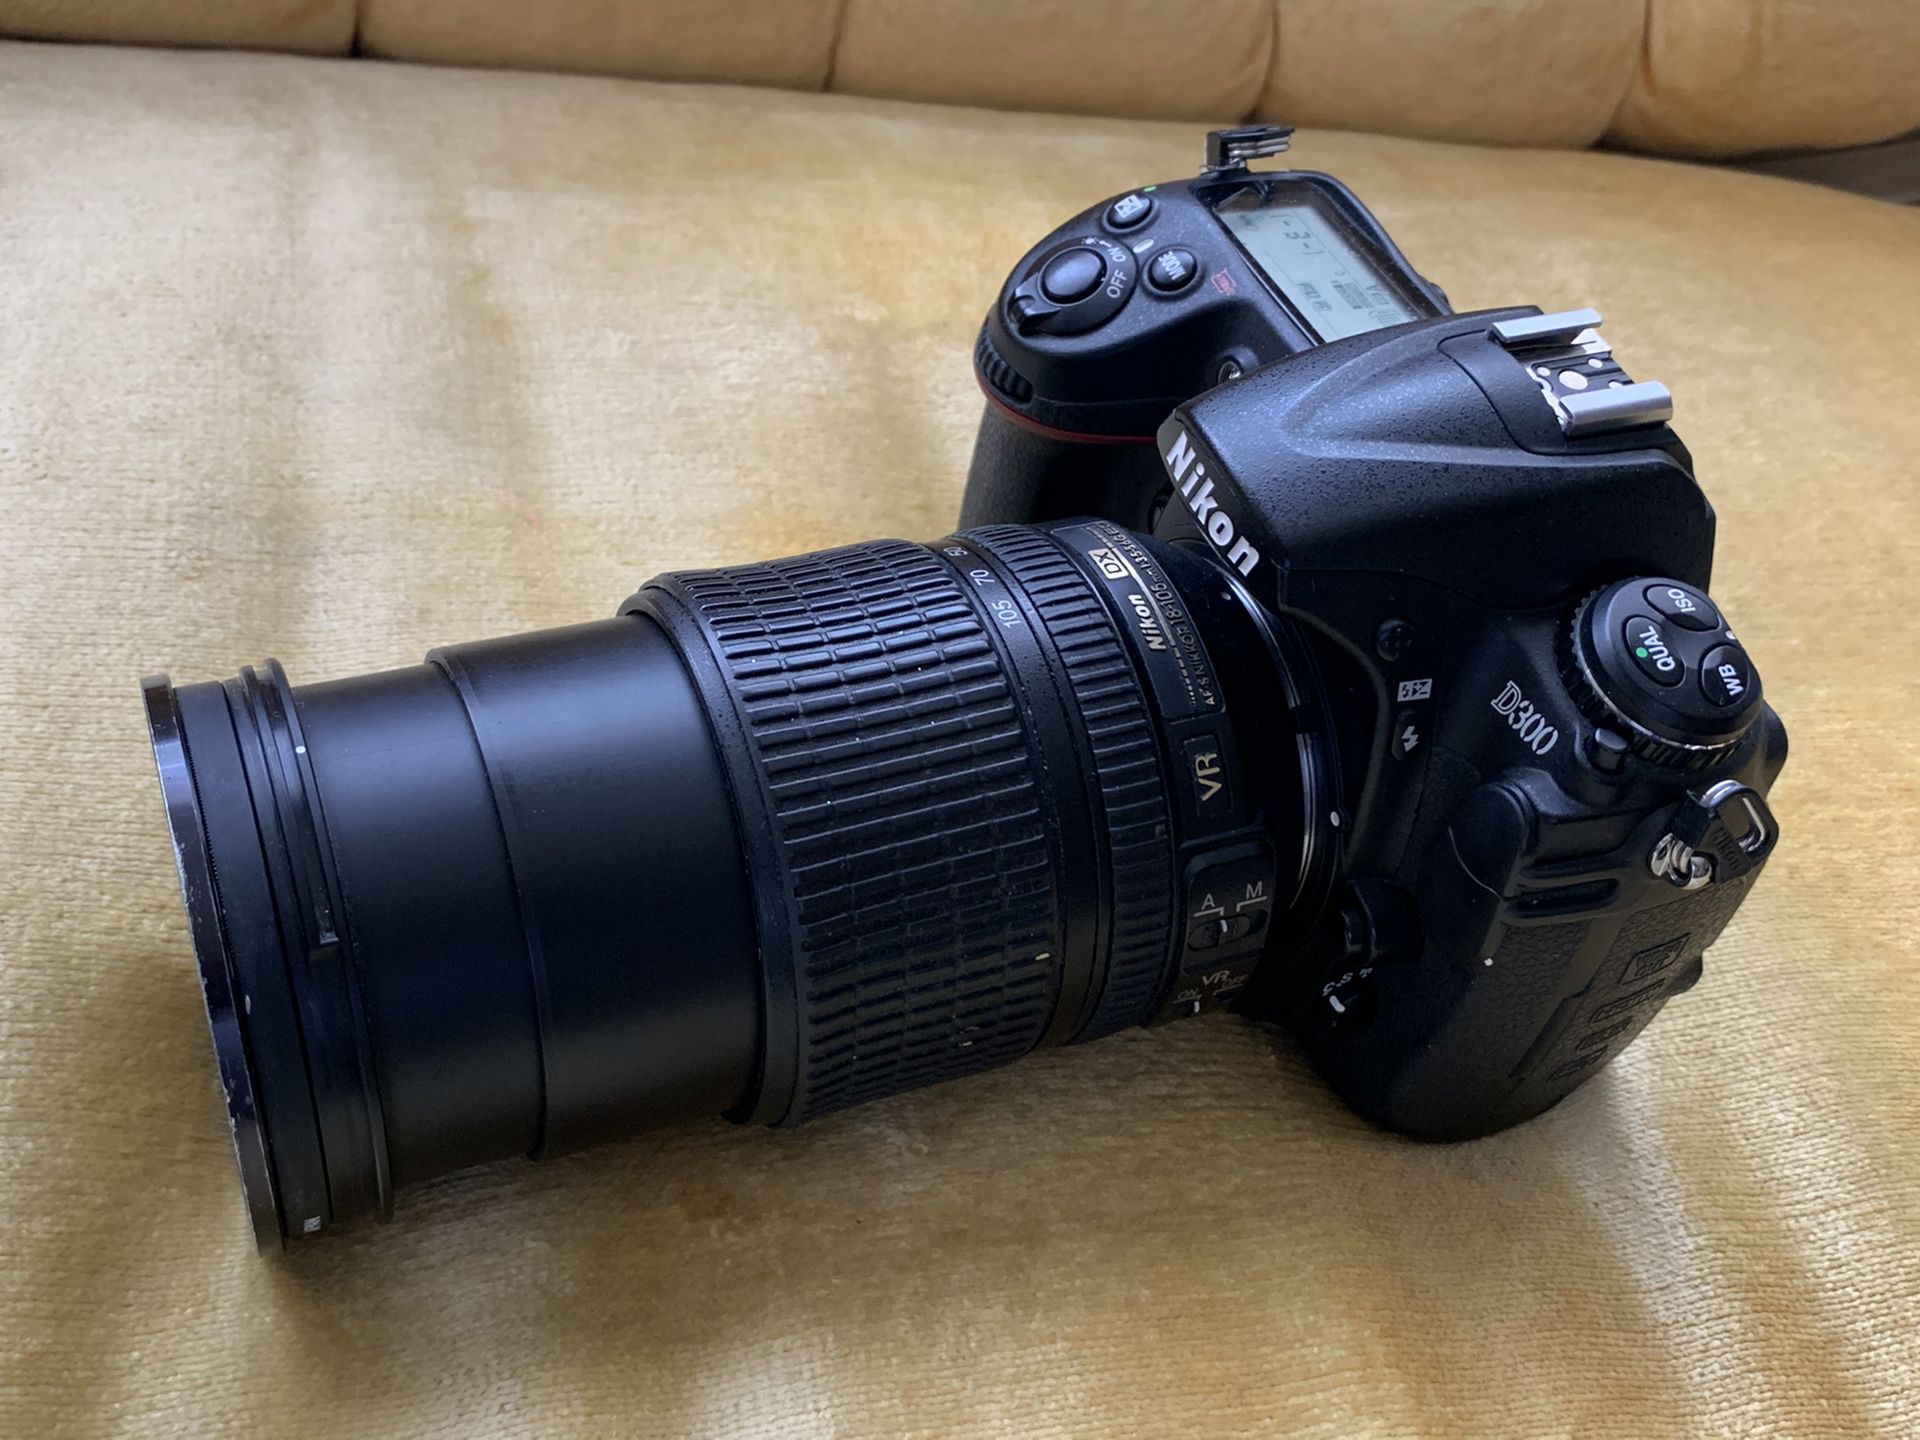 Nikon D300 digital SLR camera